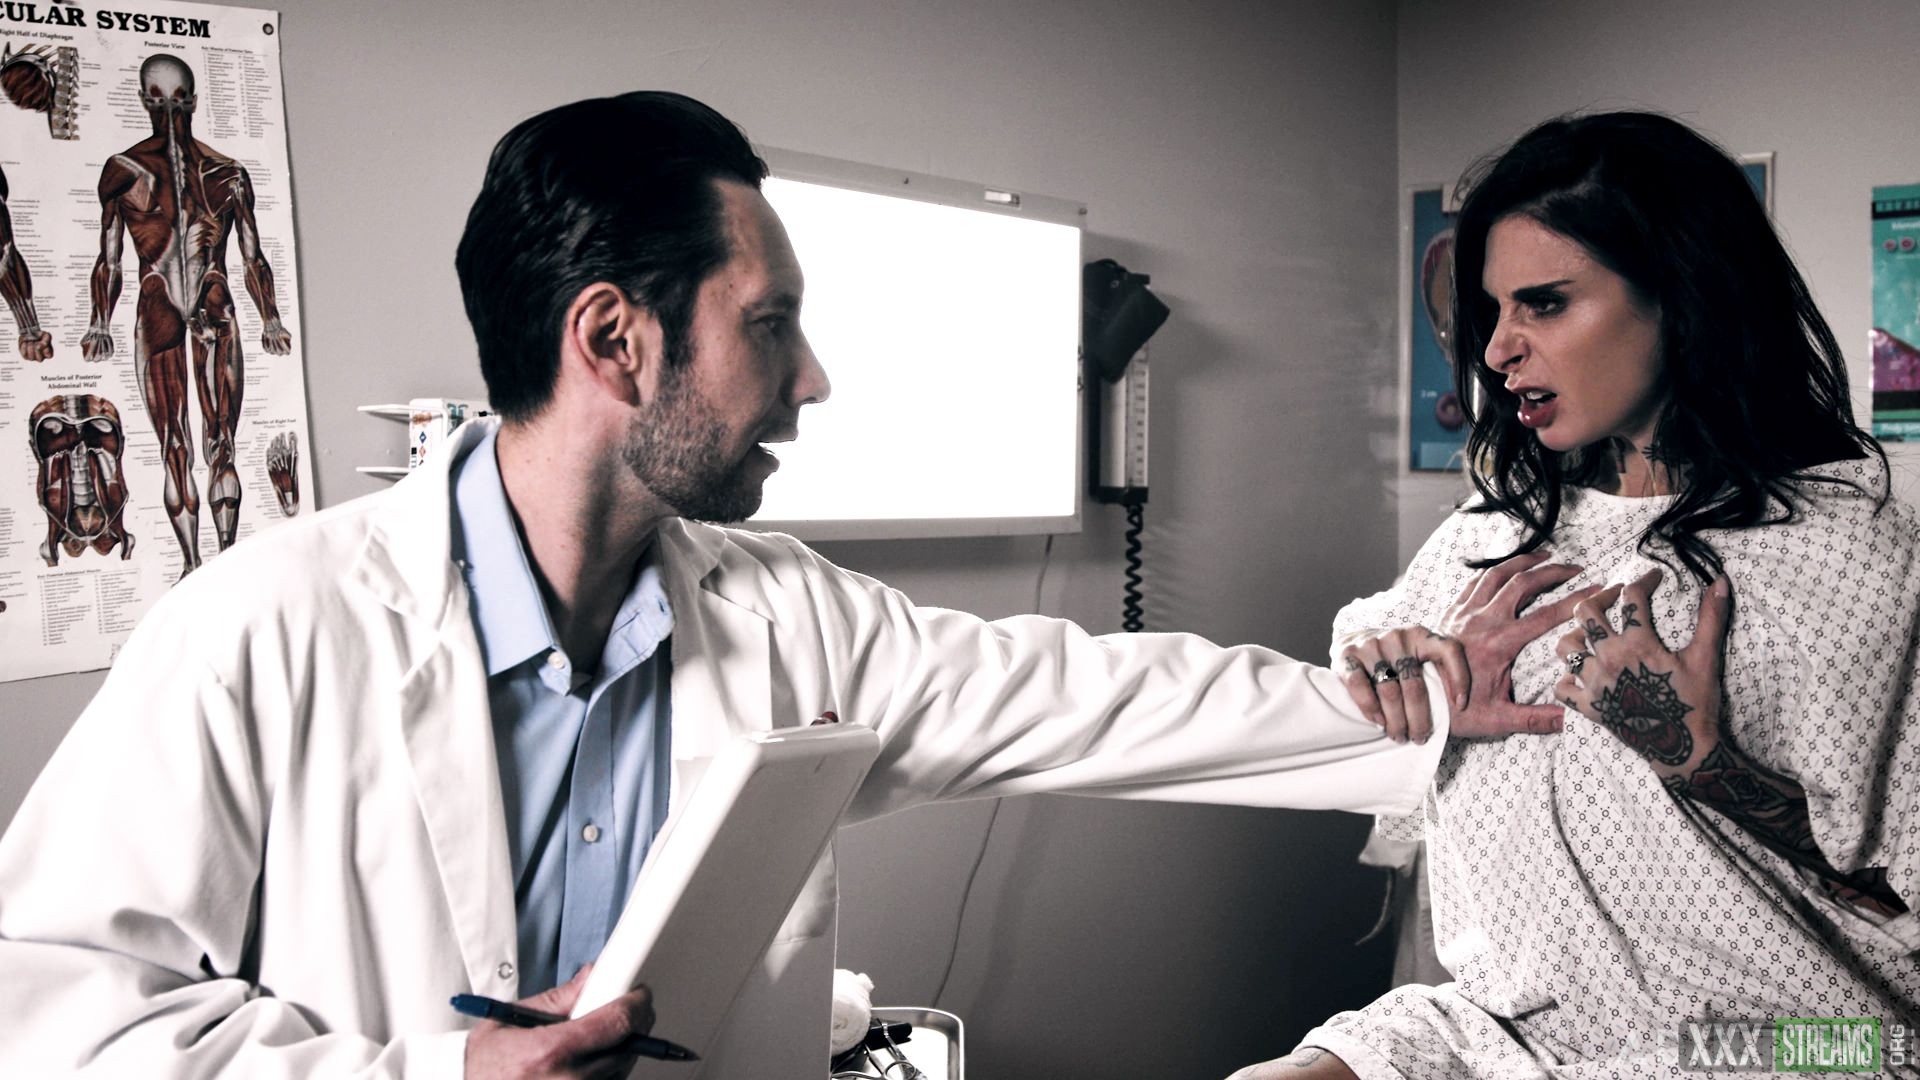 UnrelatedX] Joanna Angel - The Family Doctor (2020) - XXXStreams.org